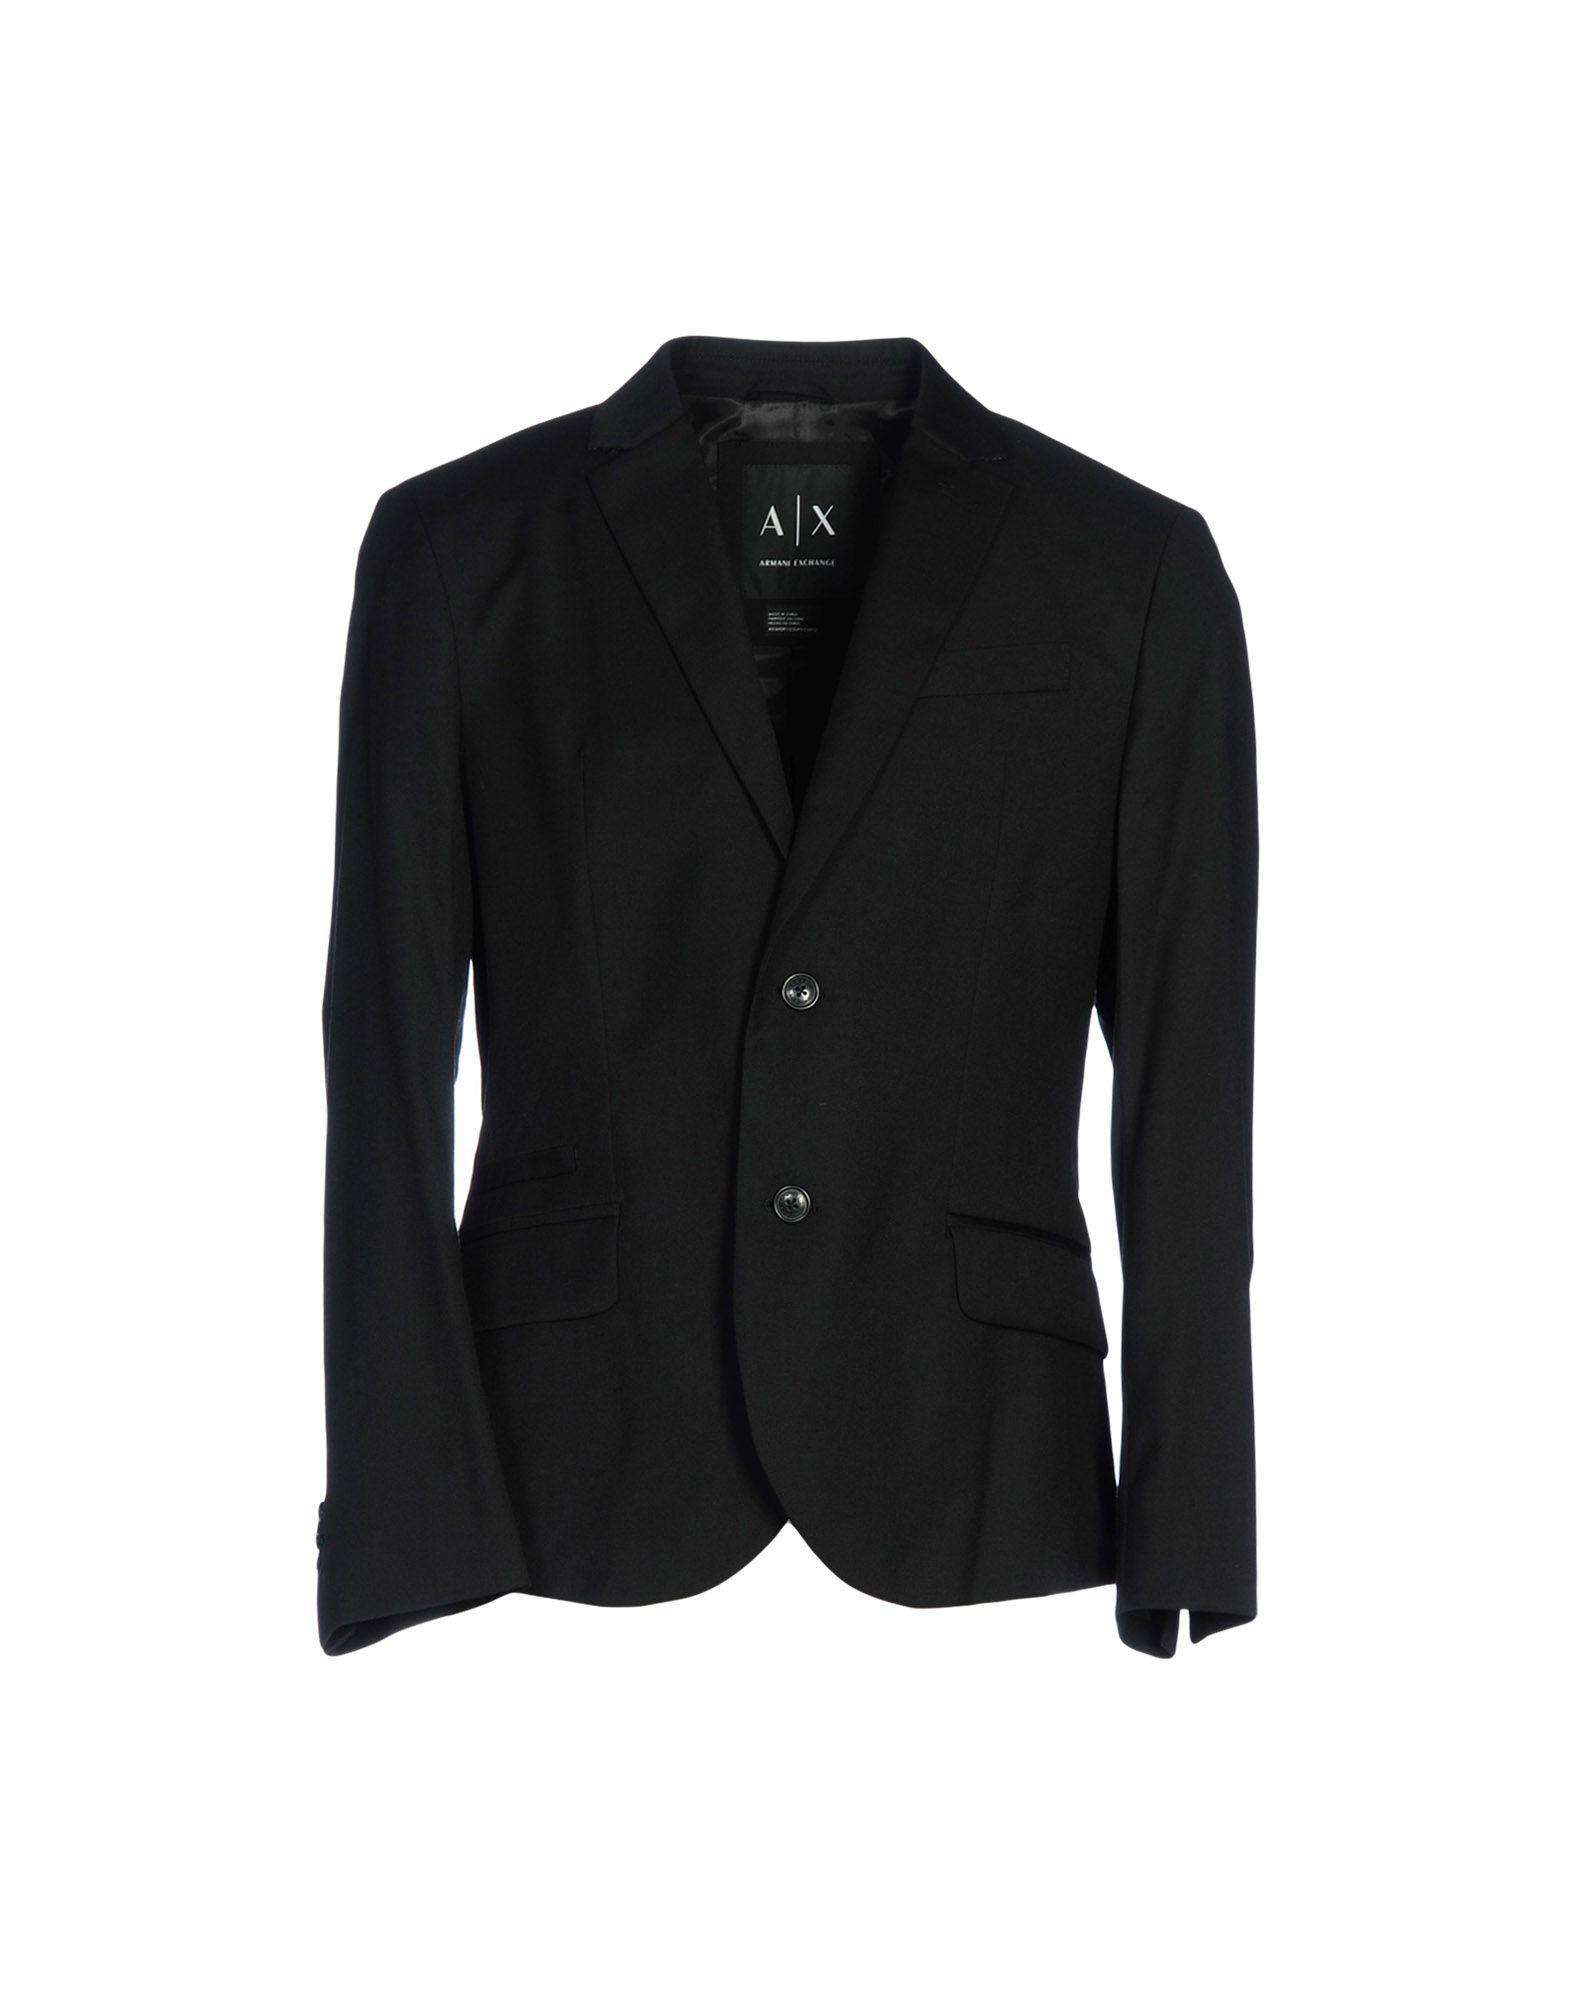 Lyst - Armani Exchange Blazer in Black for Men